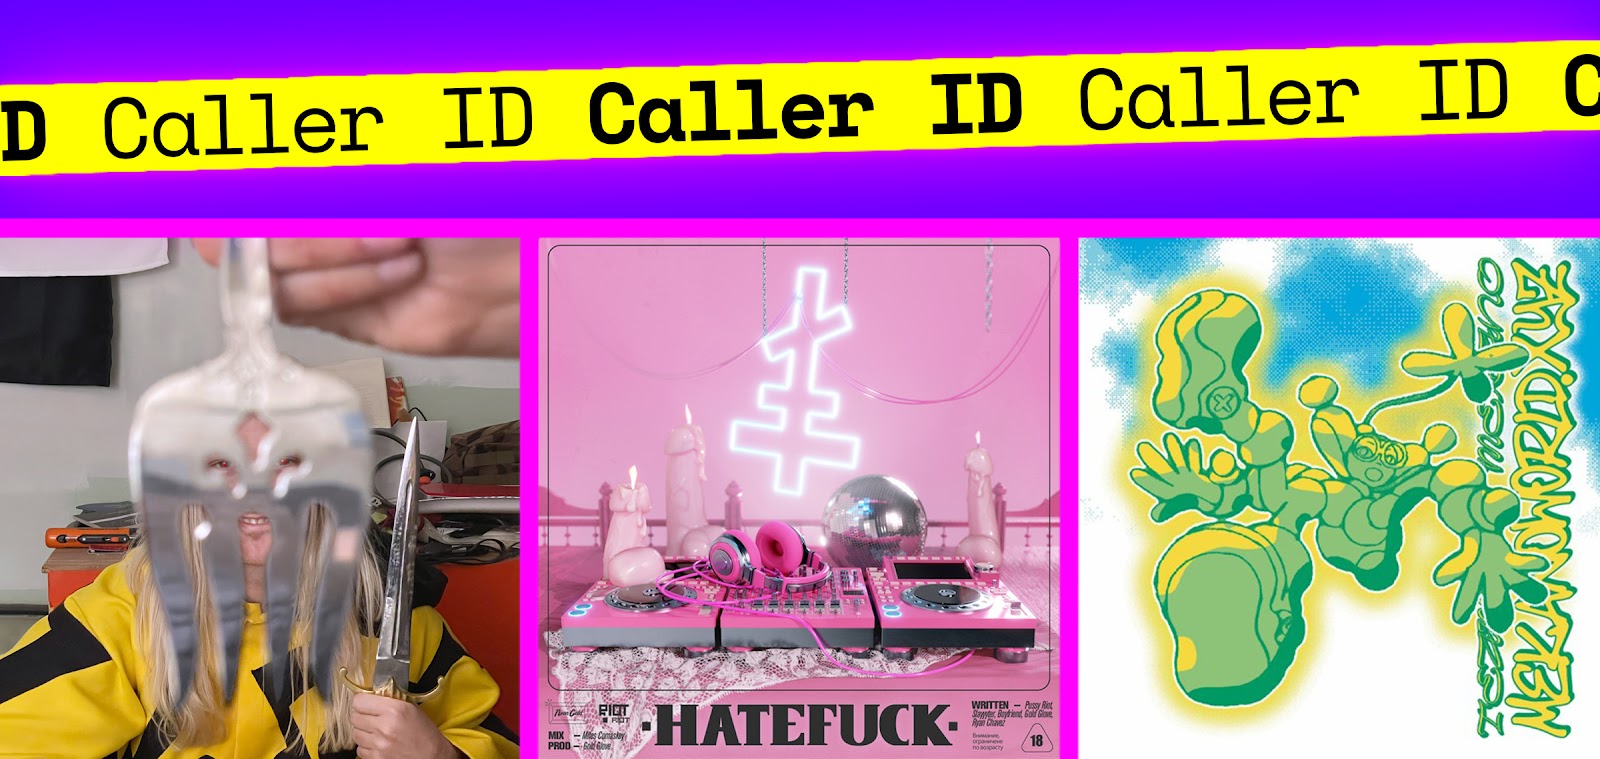 Caller ID: Track Roundup — April 2022